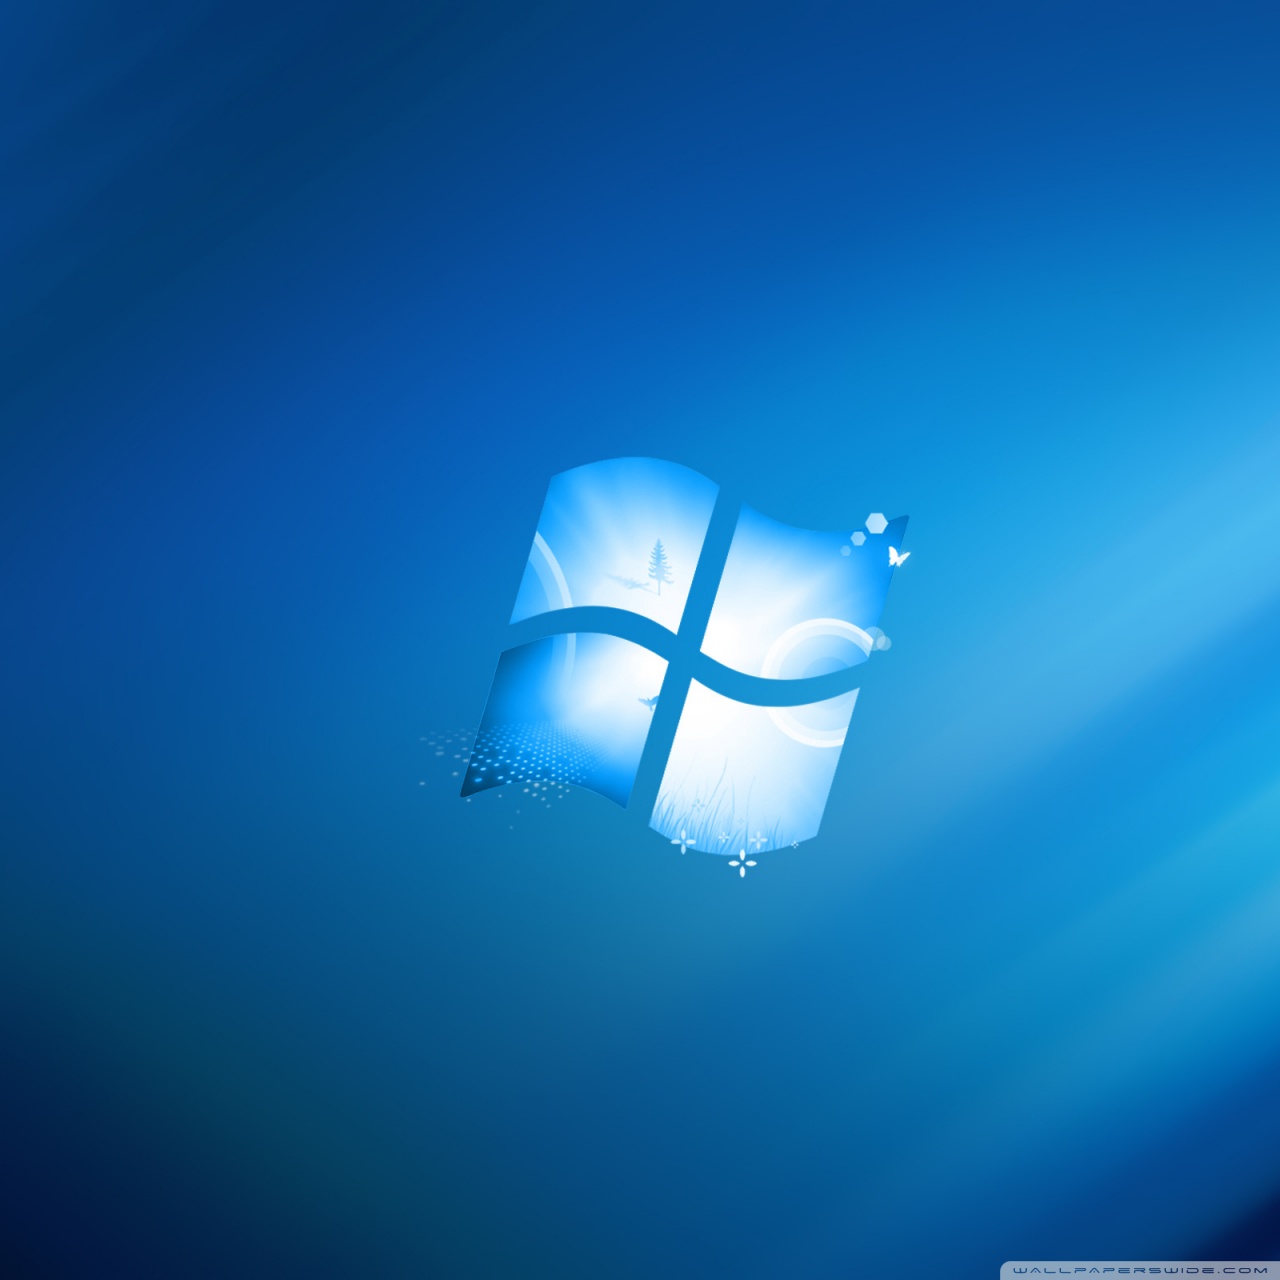 Windows 8 Background I Ultra Hd Desktop Background Wallpaper For